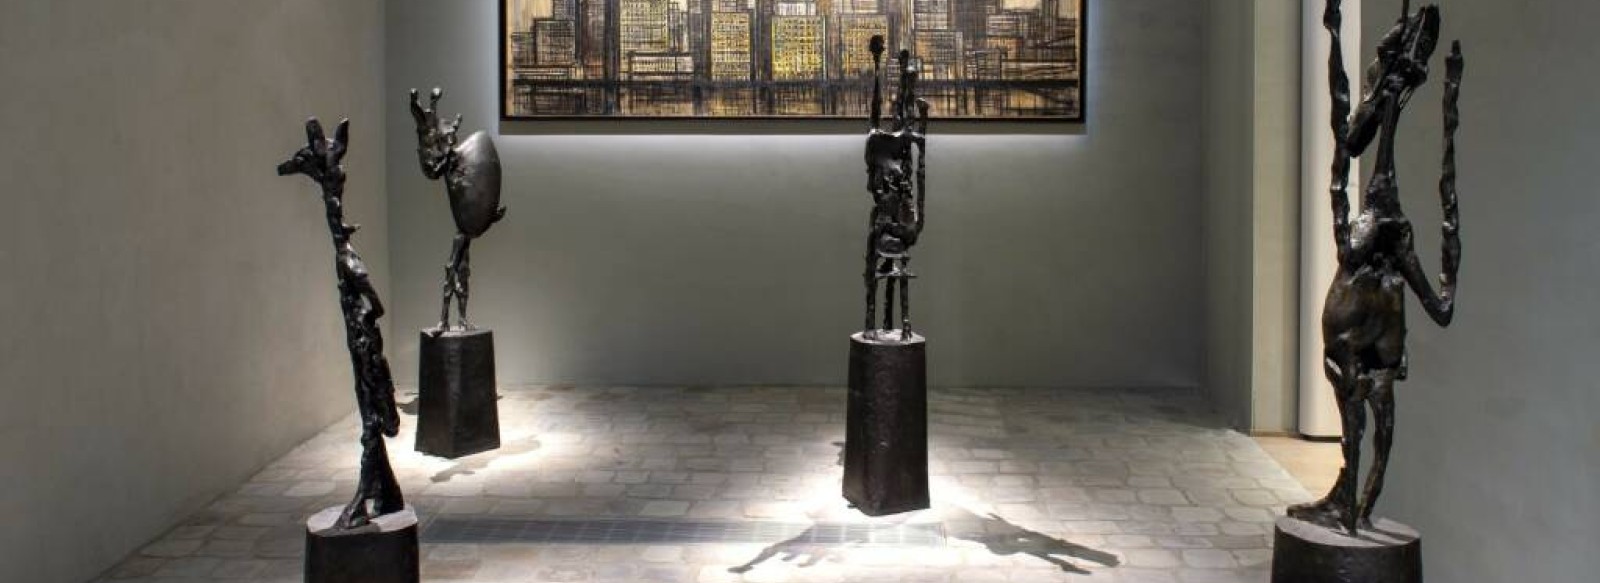 Exposition estivale au musee d'Art moderne de Fontevraud : Bernard Buffet, medieval et pop